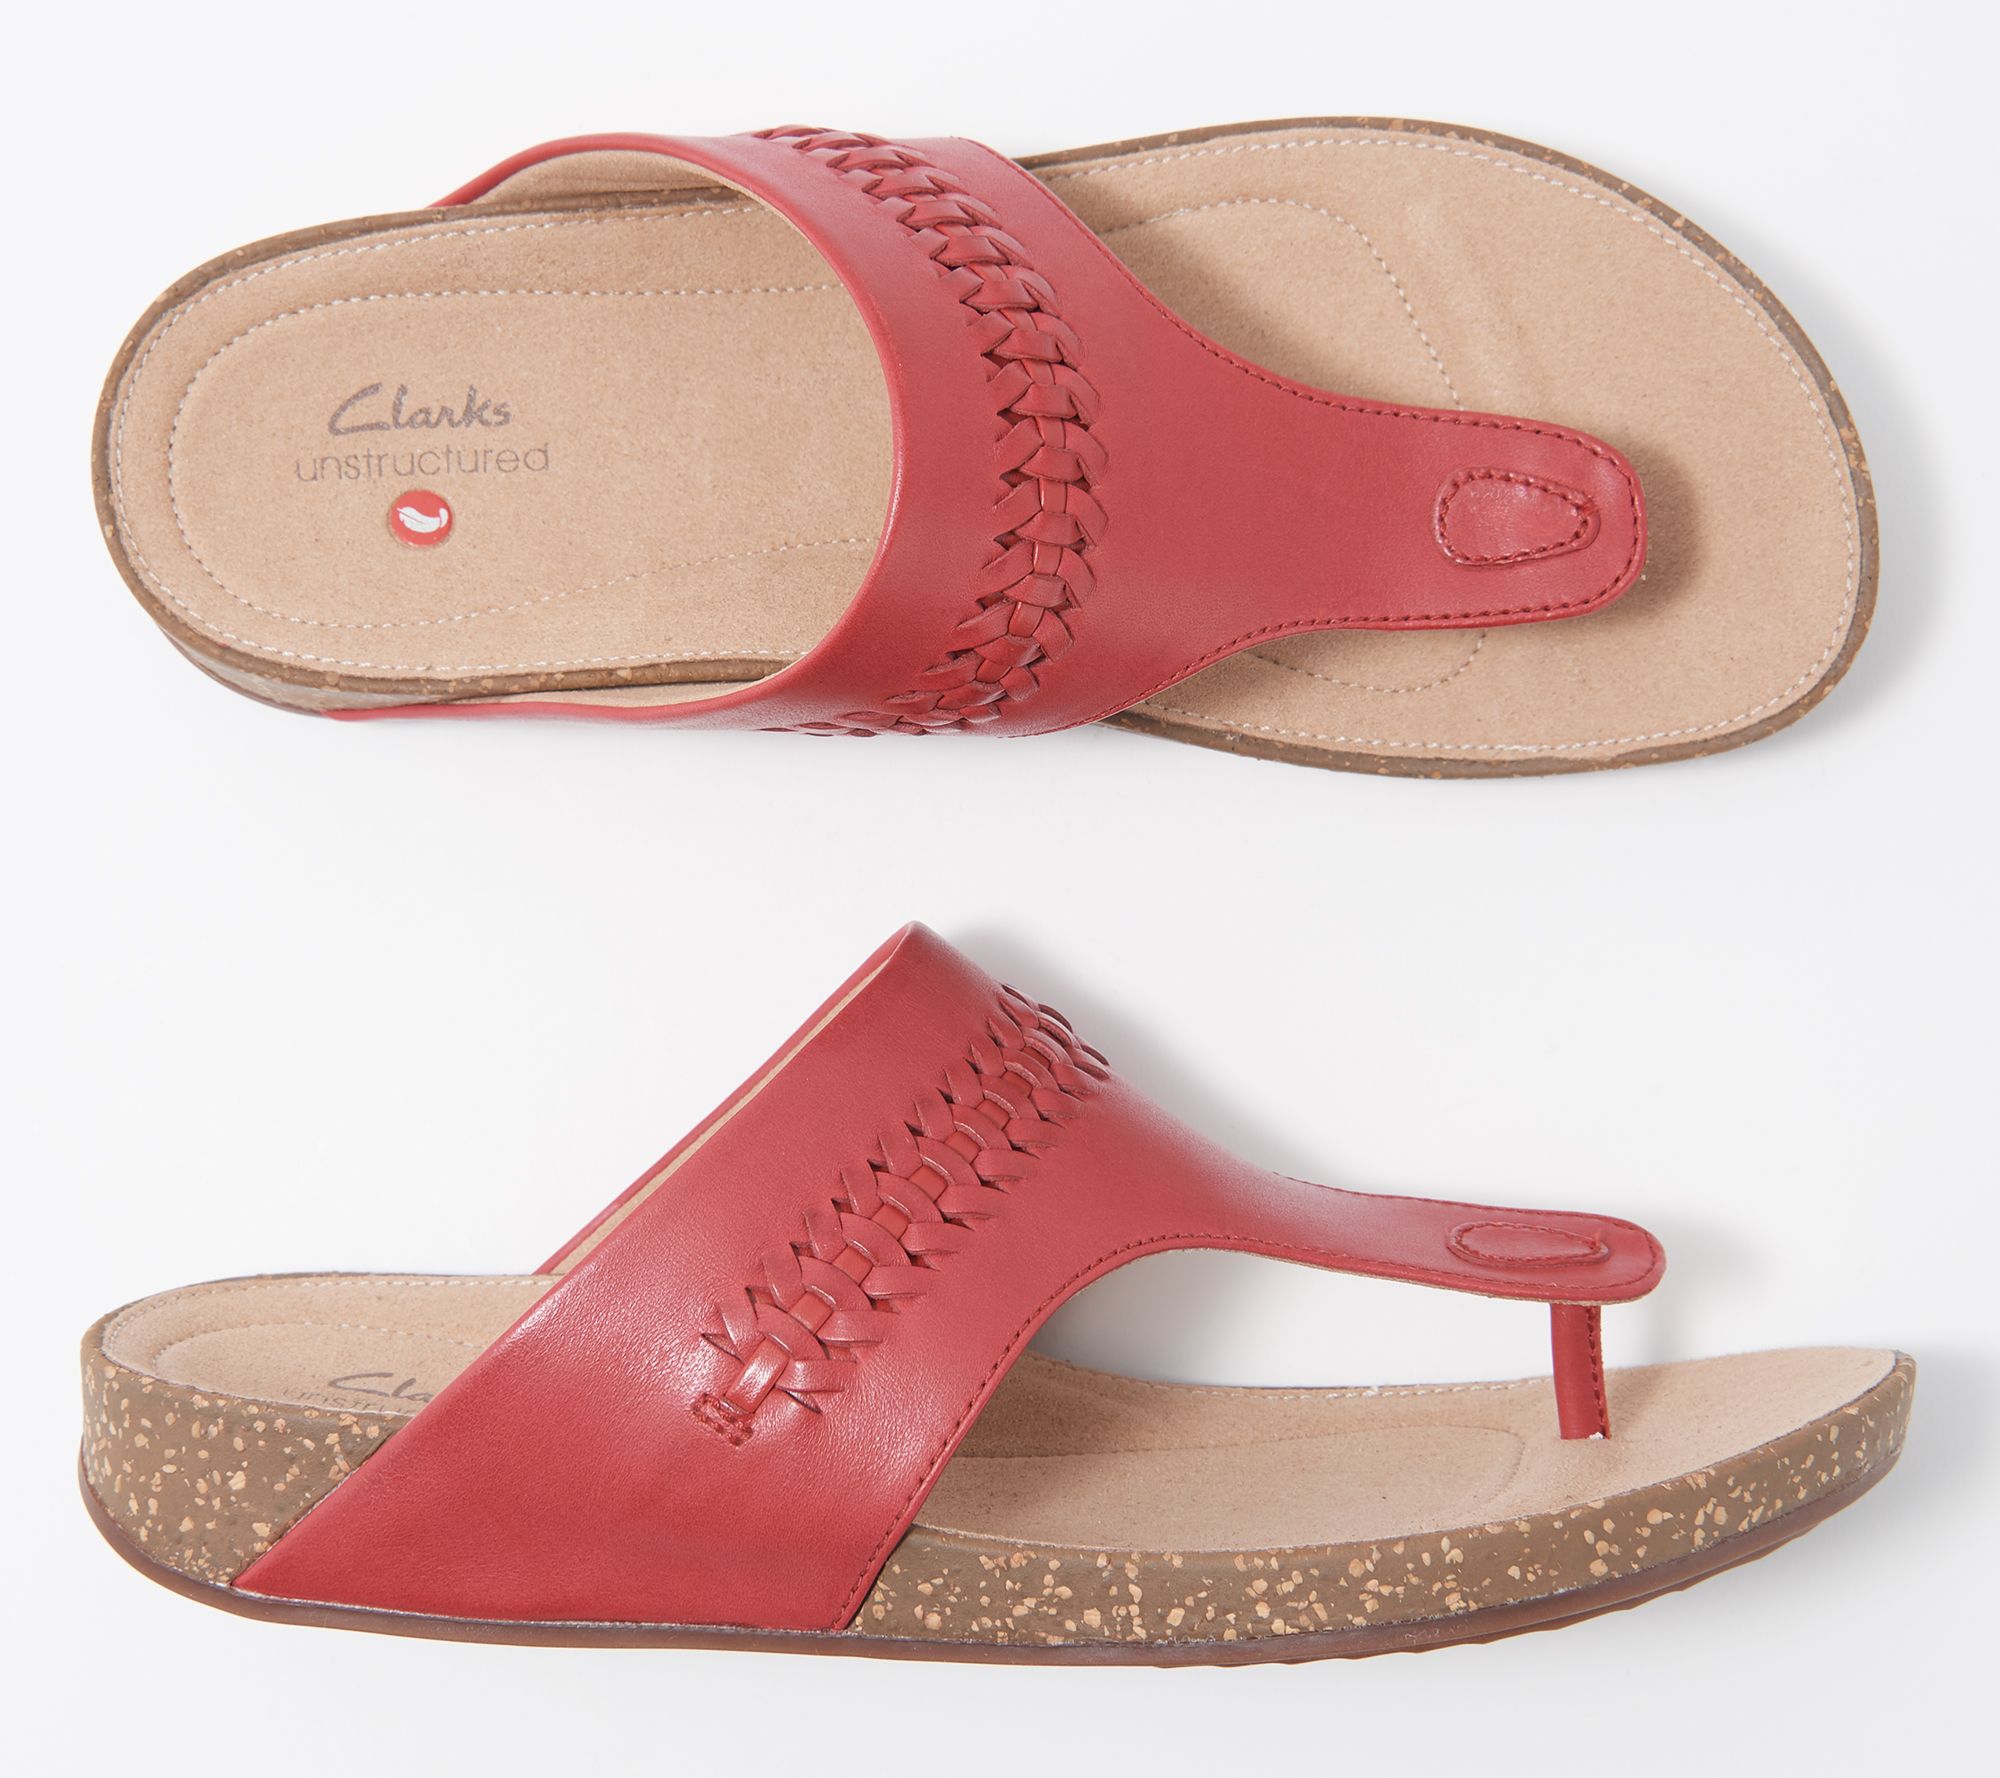 clarks unstructured sandals